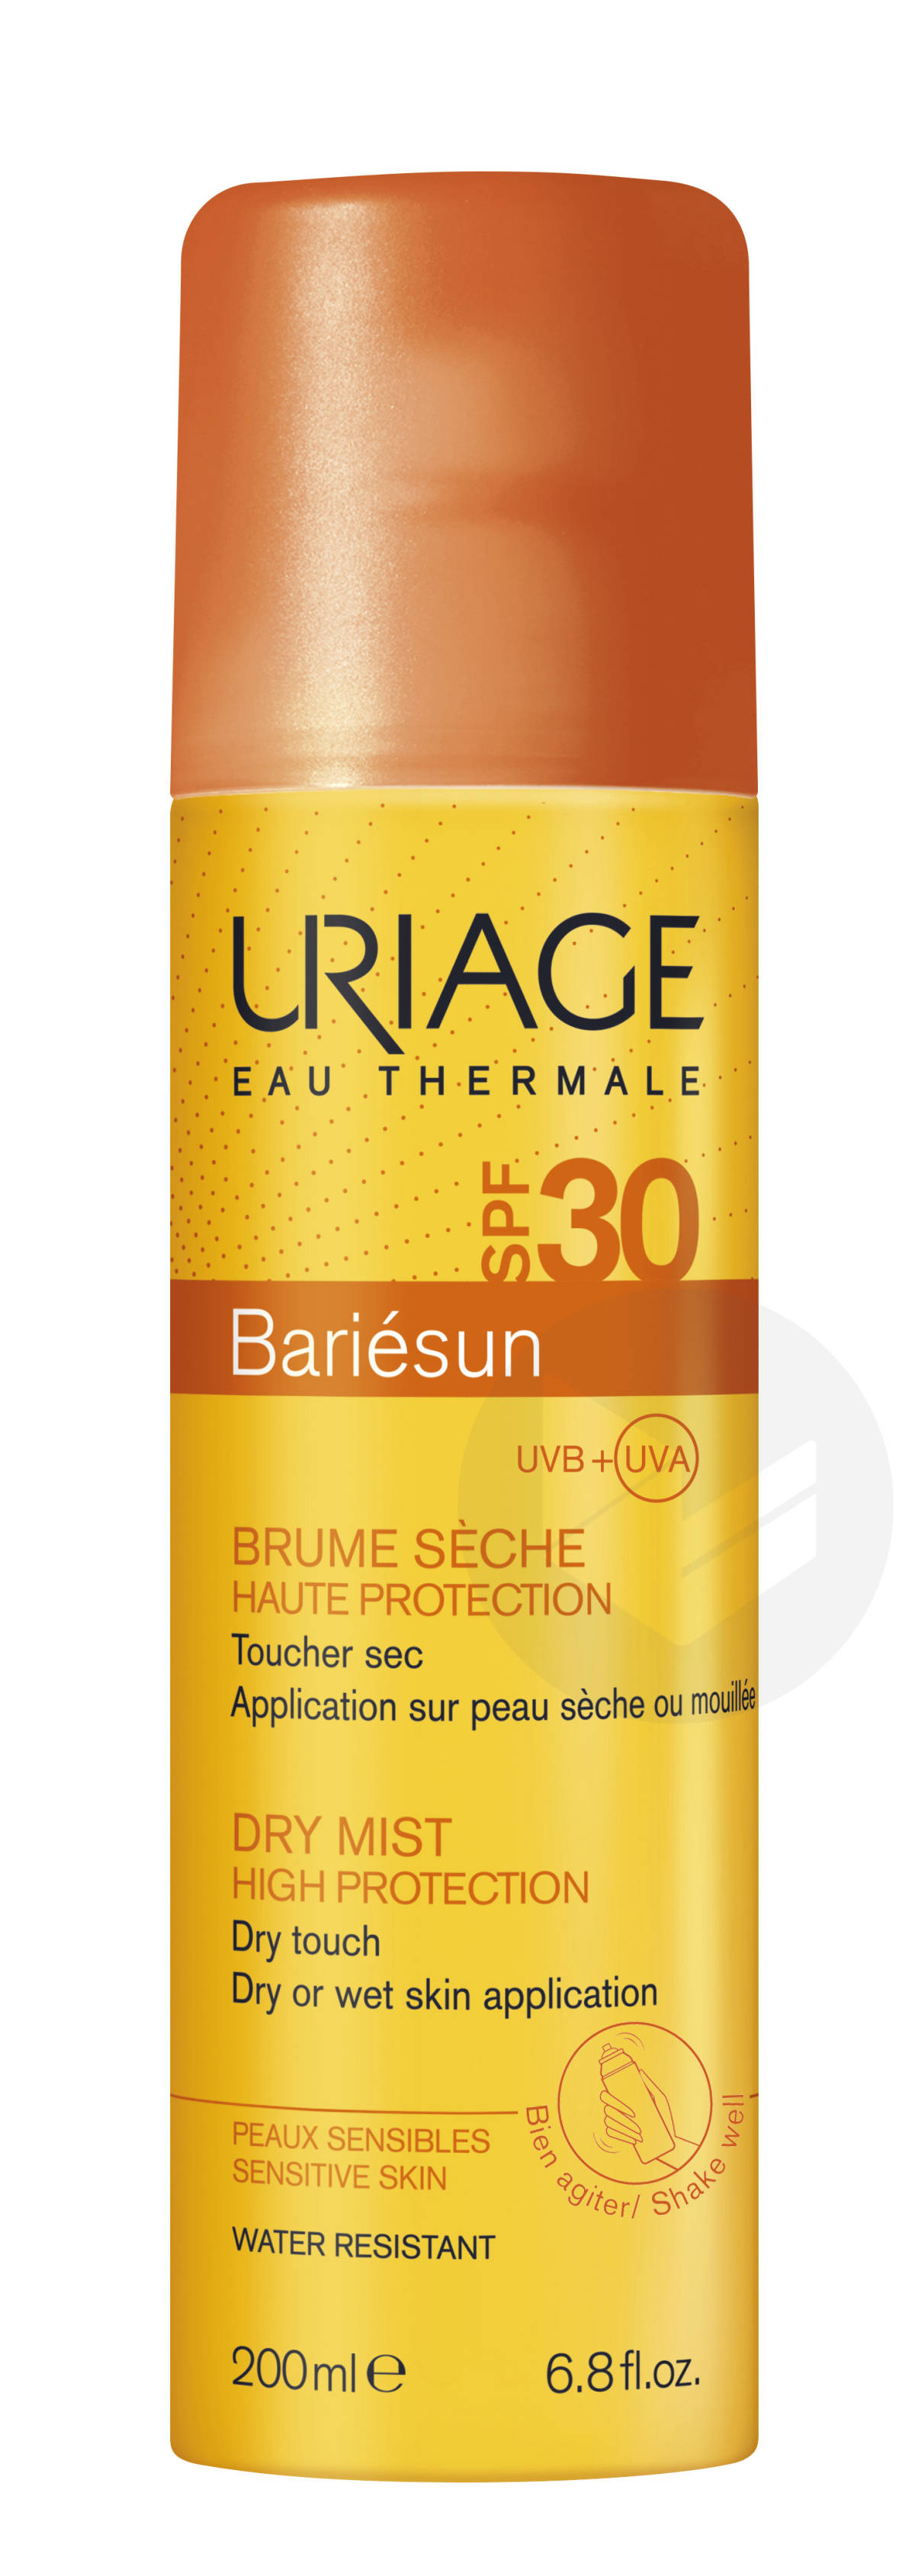 Bariésun Brume Sèche SPF30 200ml